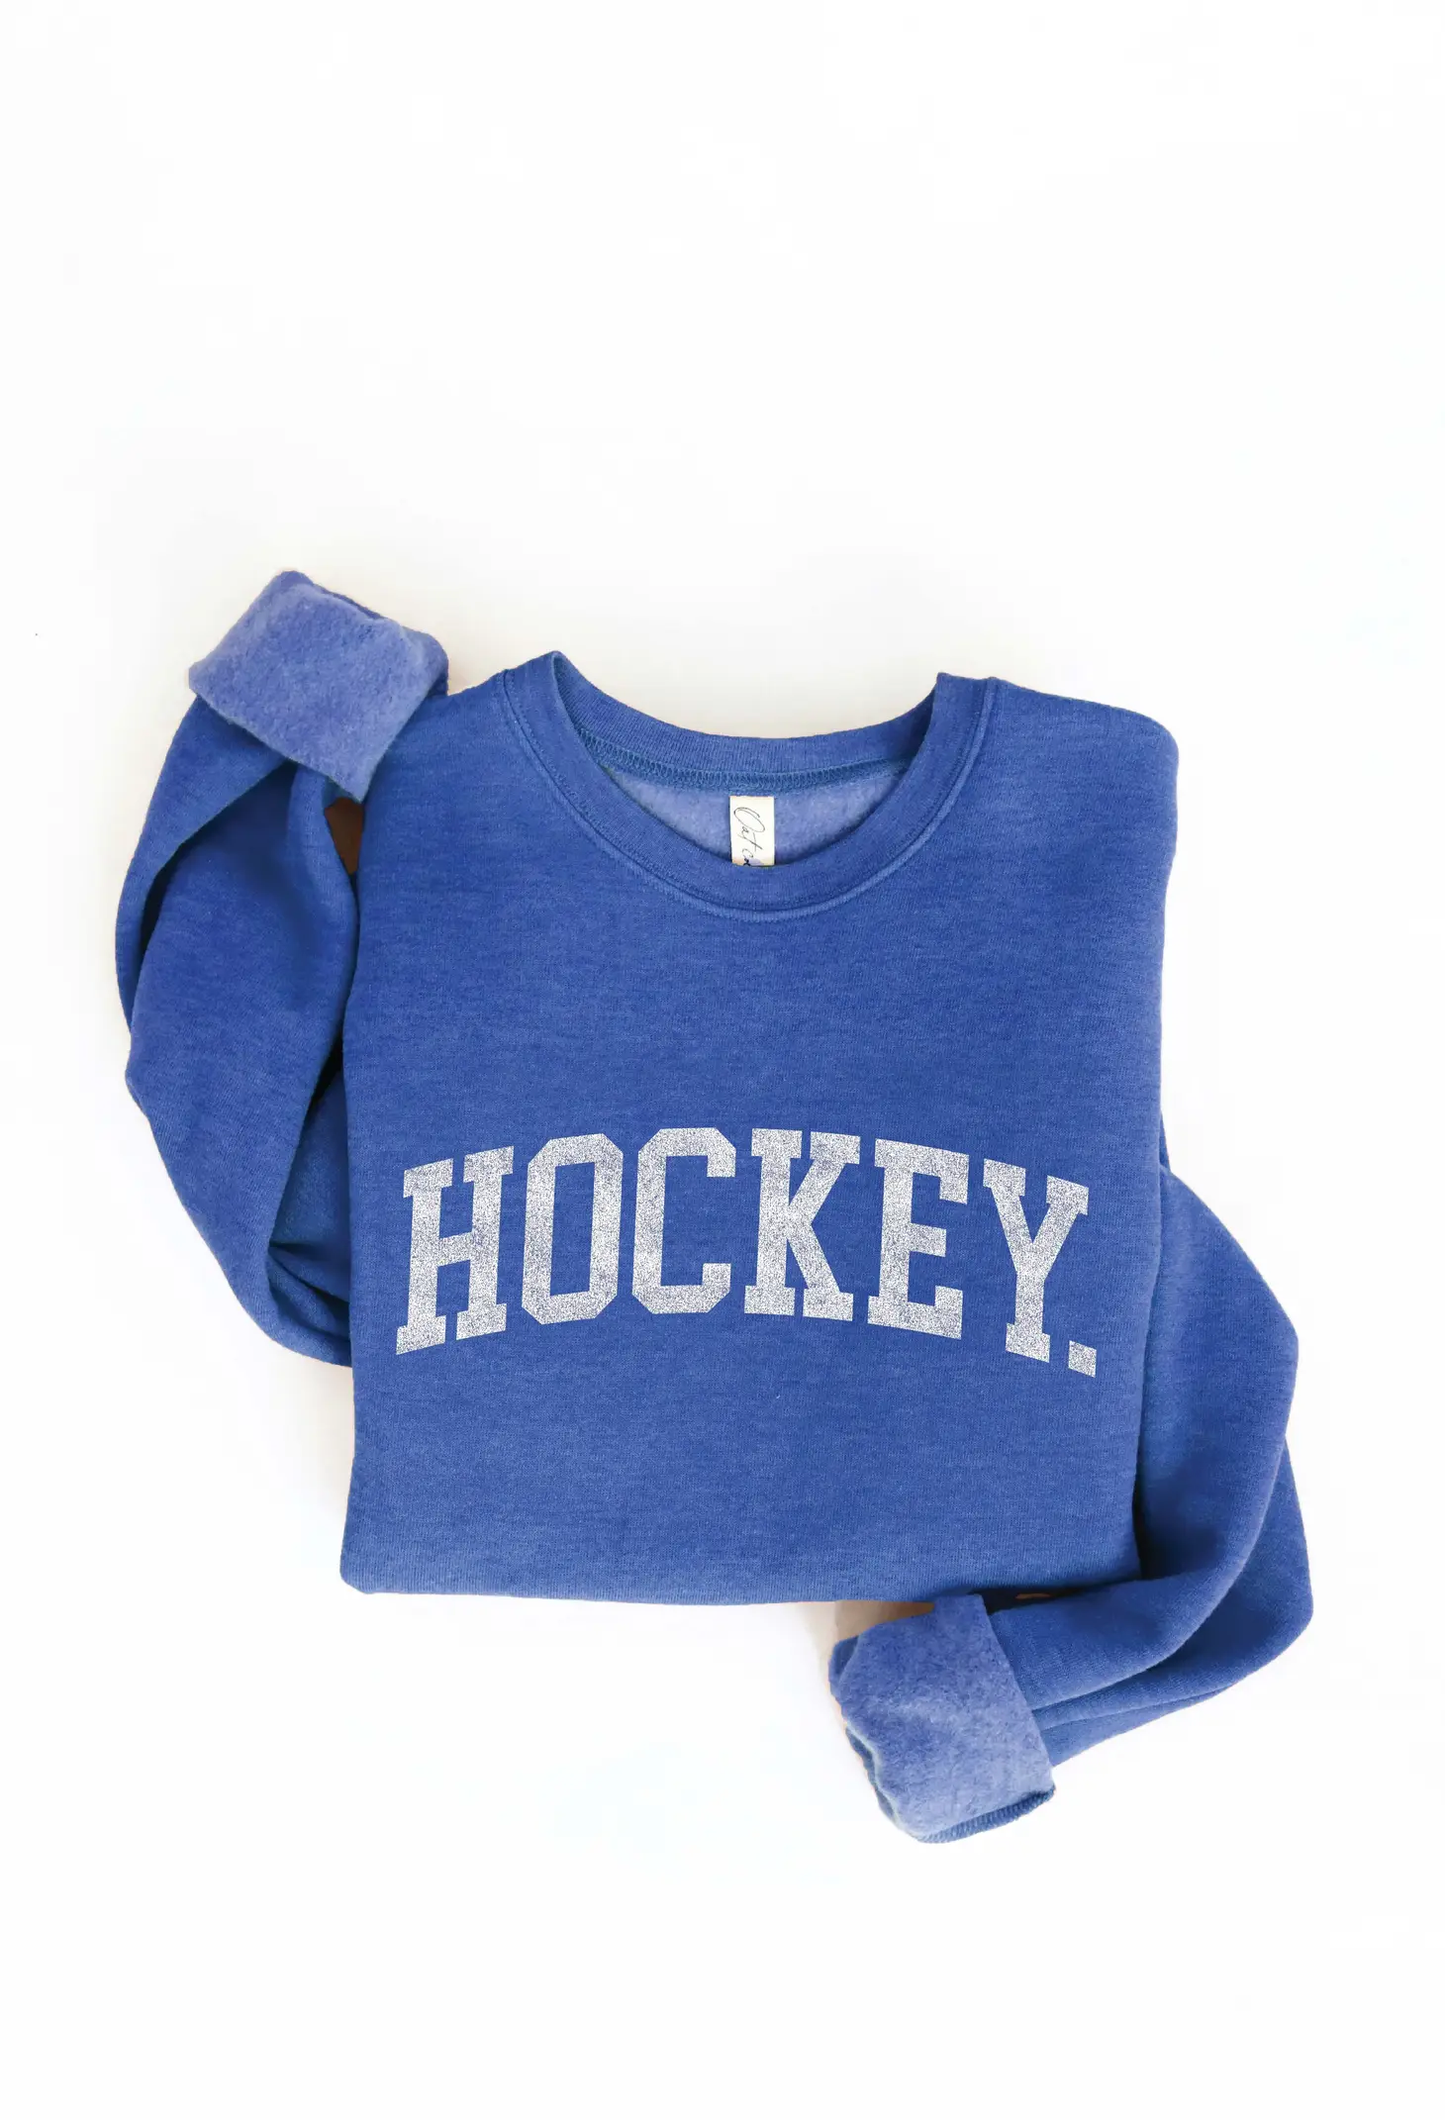 HOCKEY - Graphic Sweatshirt - Heather Royal